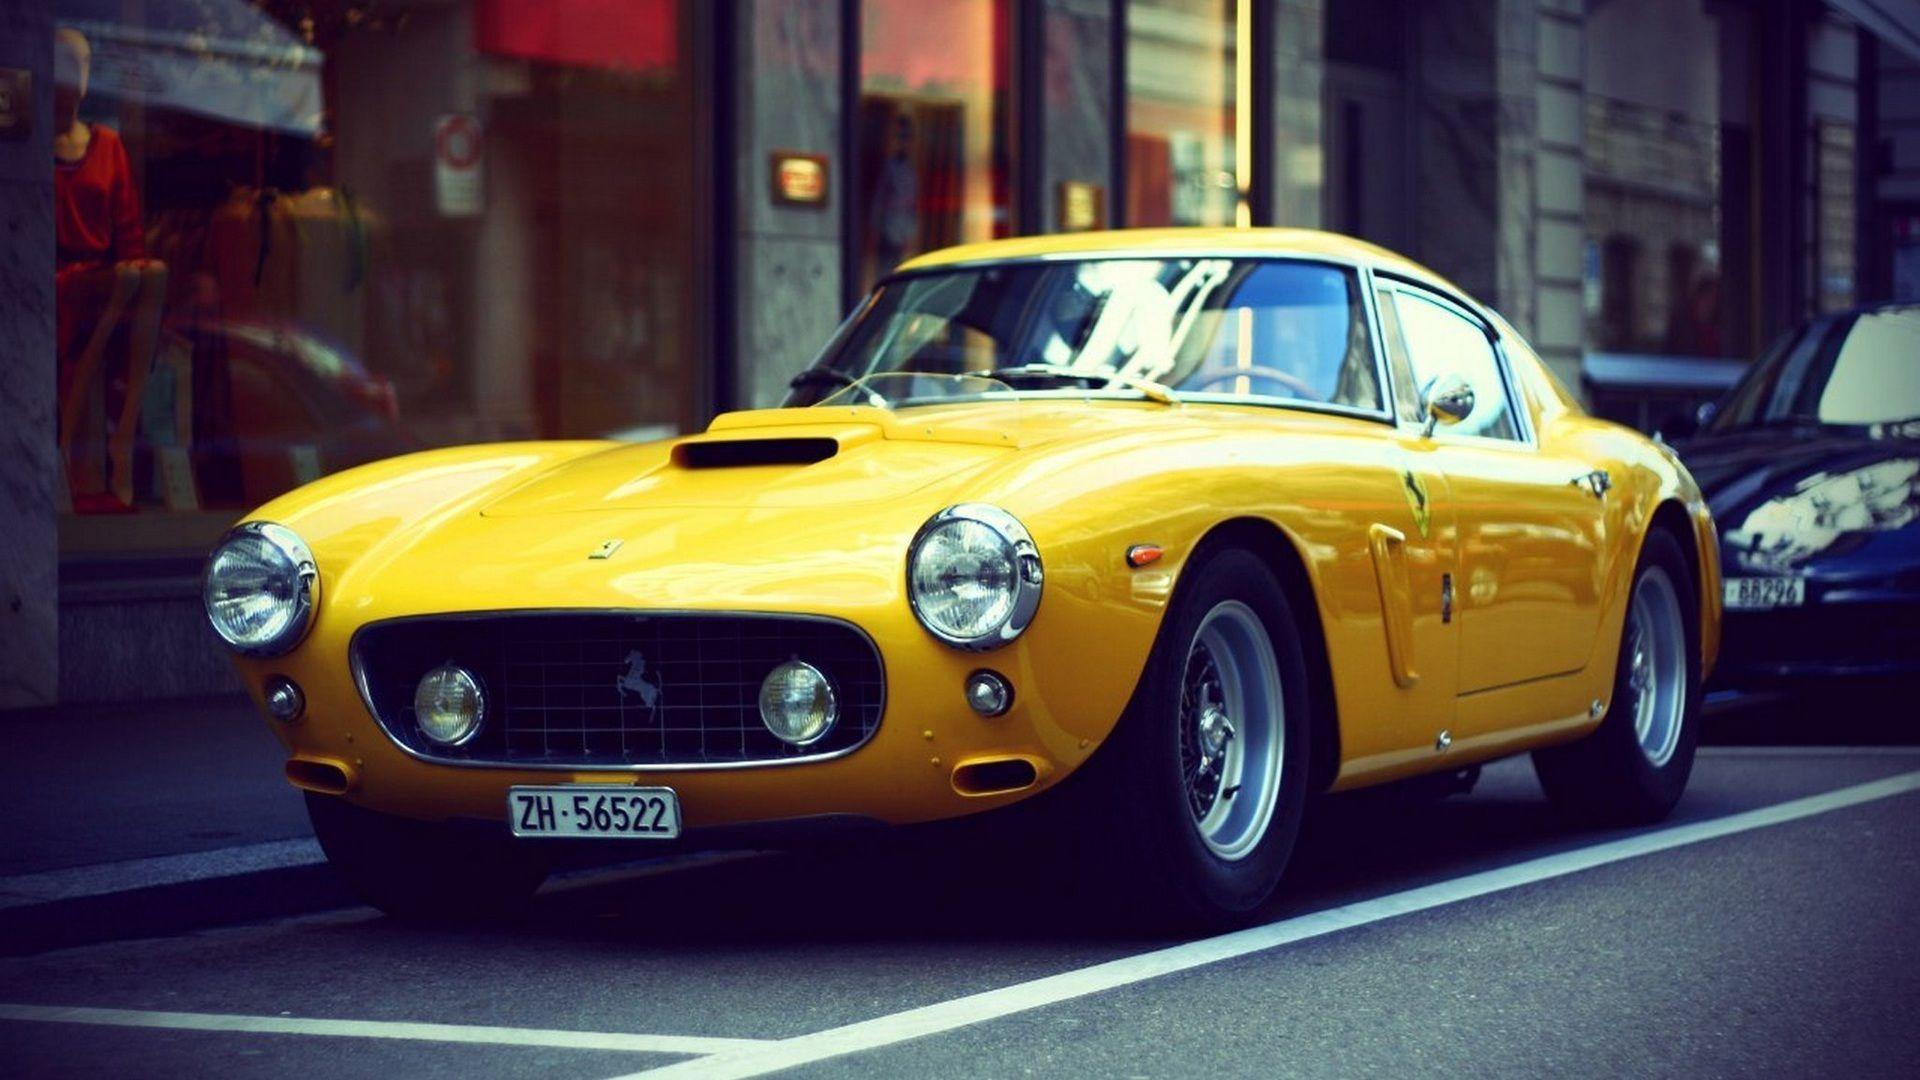 Ferrari yellow retro car wallpaper 1920x1080. Sports cars luxury, Classic cars, Ferrari berlinetta